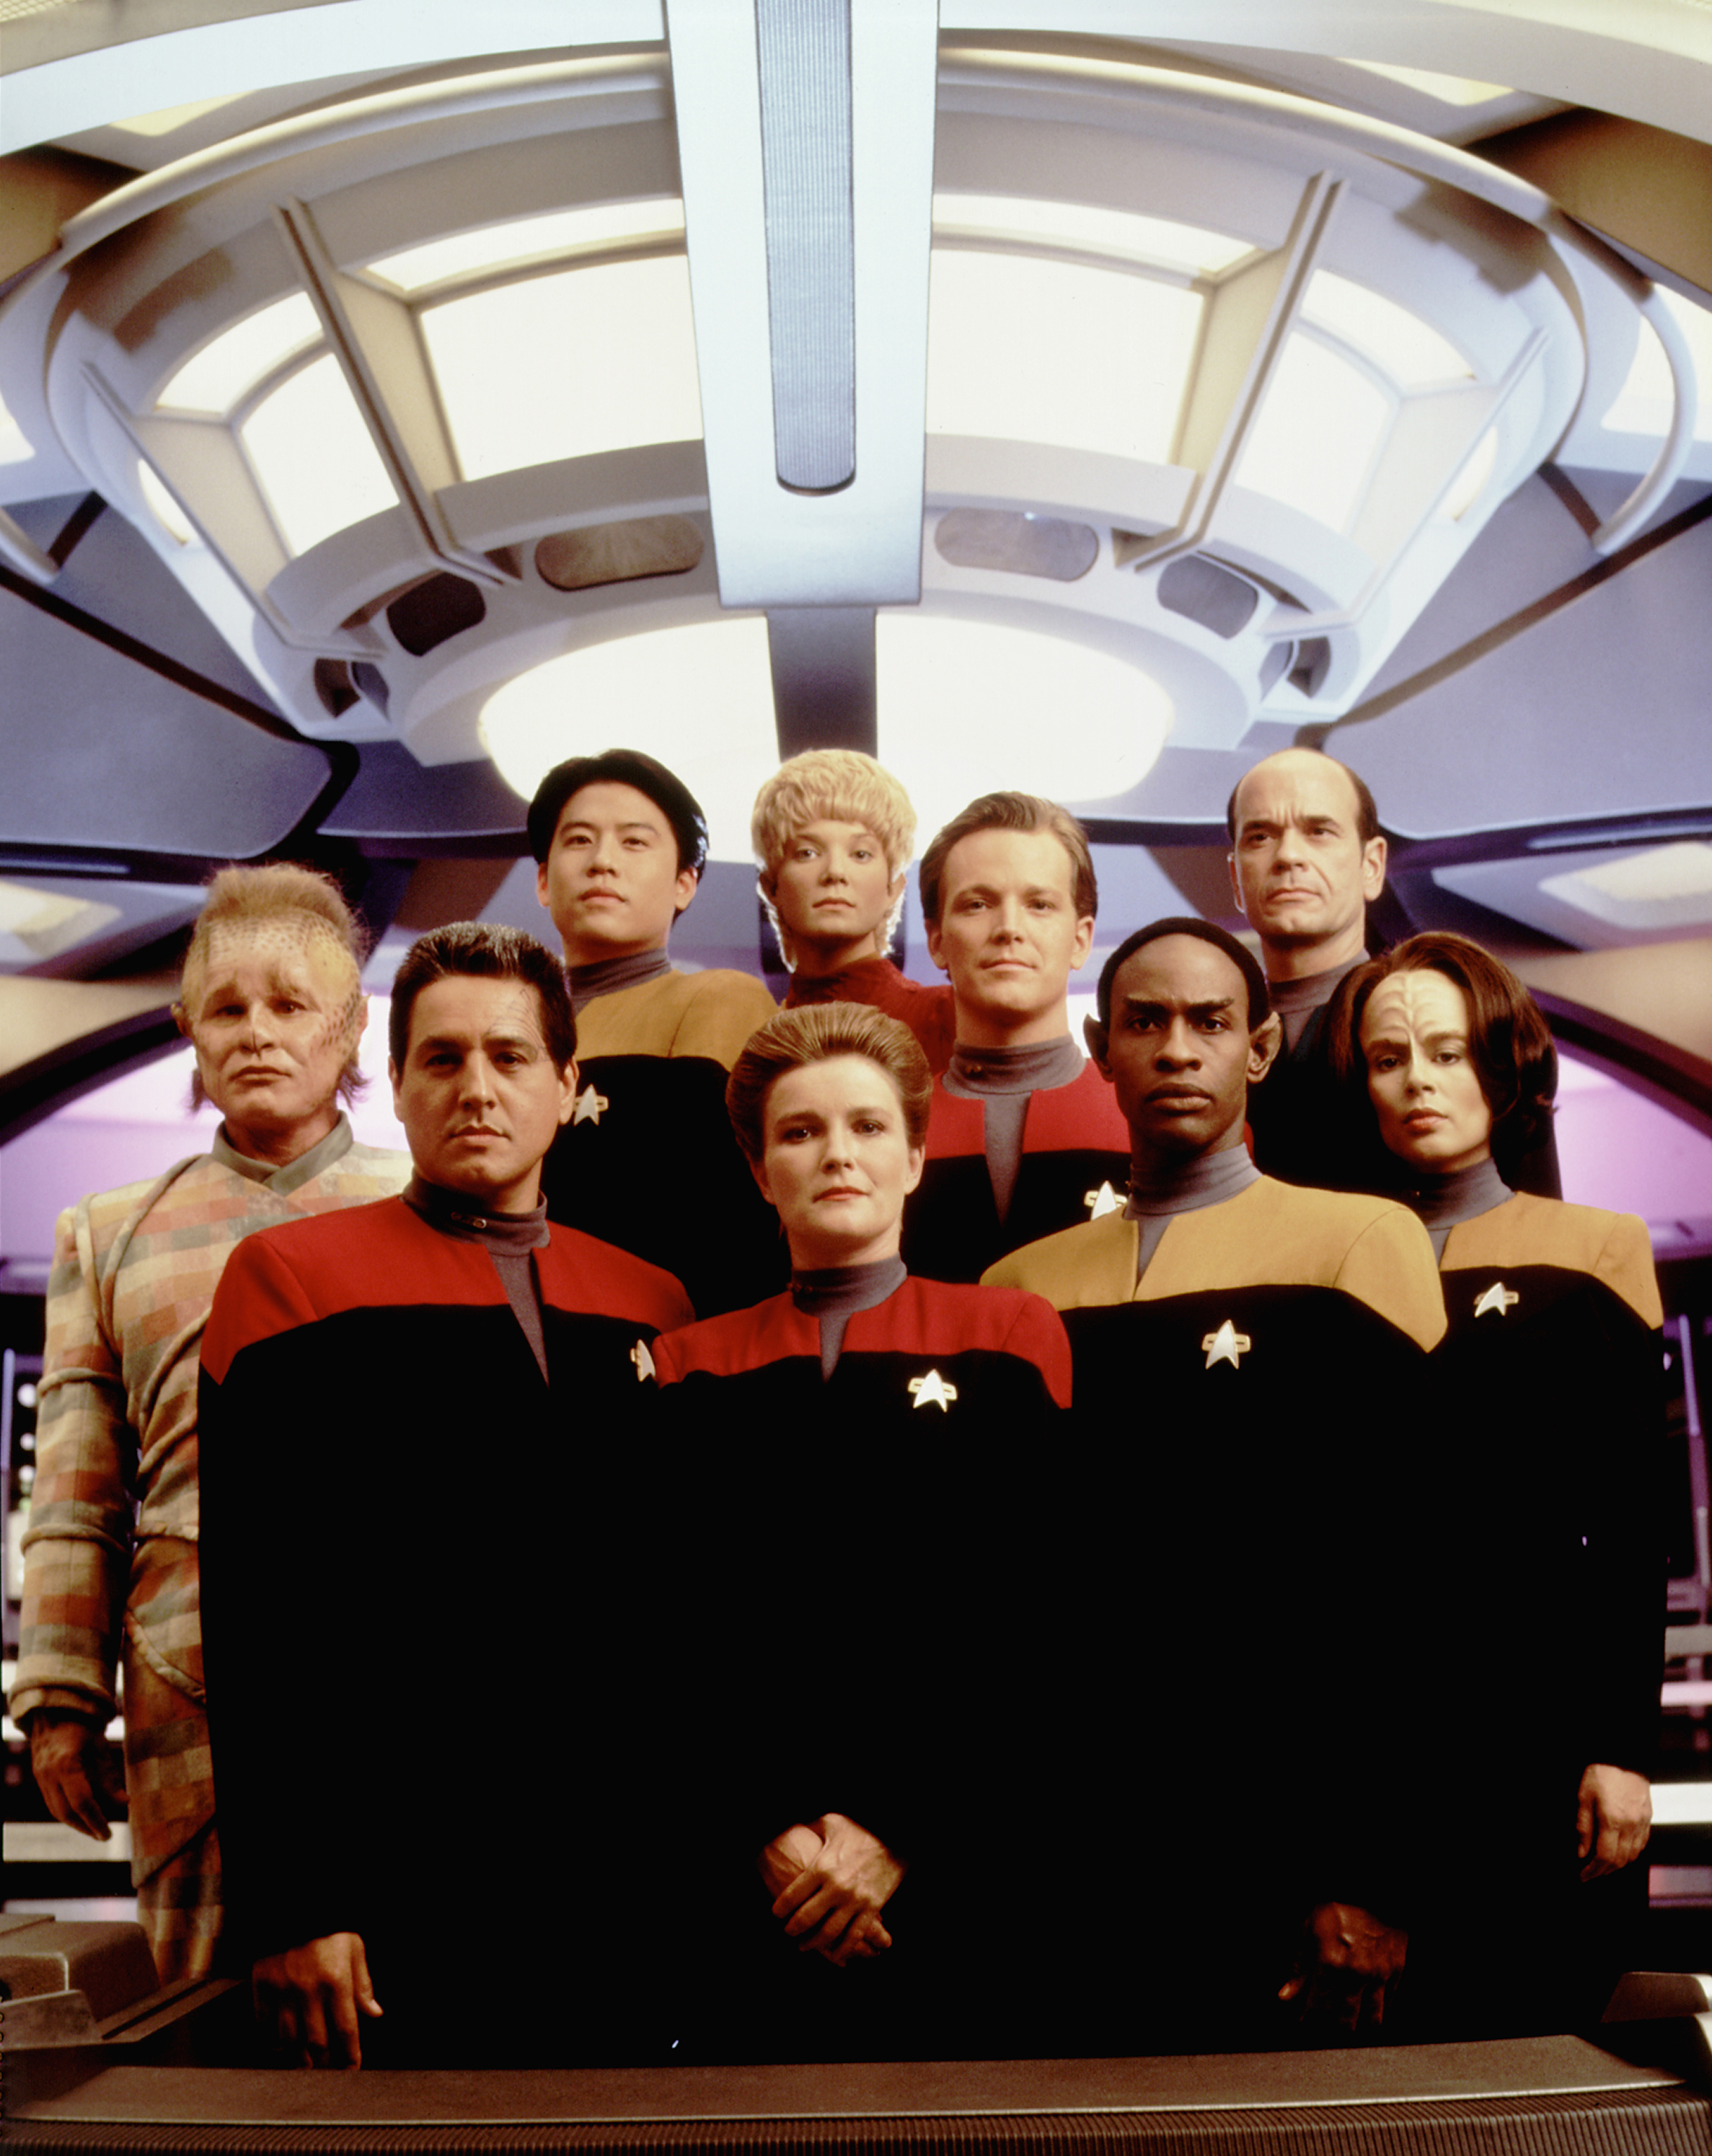 Cast of Star trek Voyager, first season, from left: Neelix (Ethan Phillips), Chakotay (Robert Beltran), Harry S.L. Kim (Garrett Wang), Kathryn Janeway (Kate Mulgrew), Kes (Jennifer Lien), Thomas Eugene Paris (Robert Duncan McNeill), Tuvok (Tim Russ), "The Doctor" (Robert Picardo), B'Elanna Torres (Roxann Dawson), 1995.